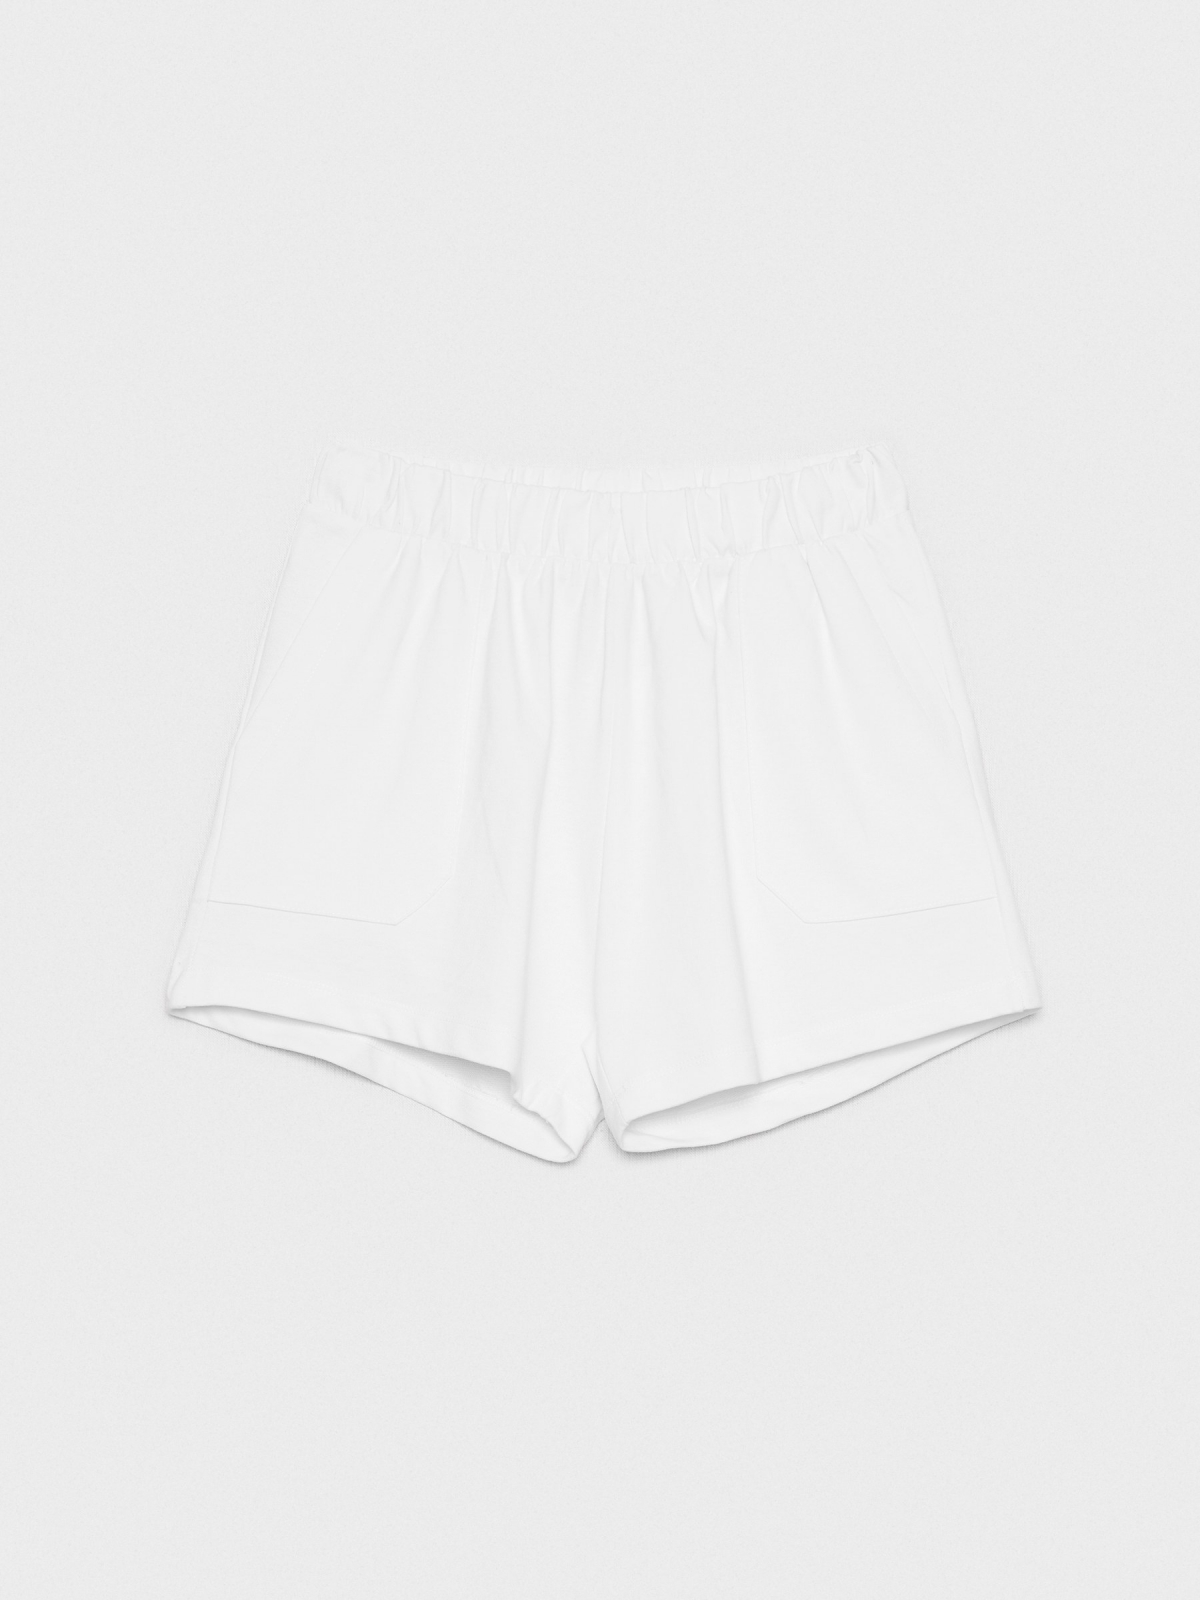  Elastic waist shorts with pockets white